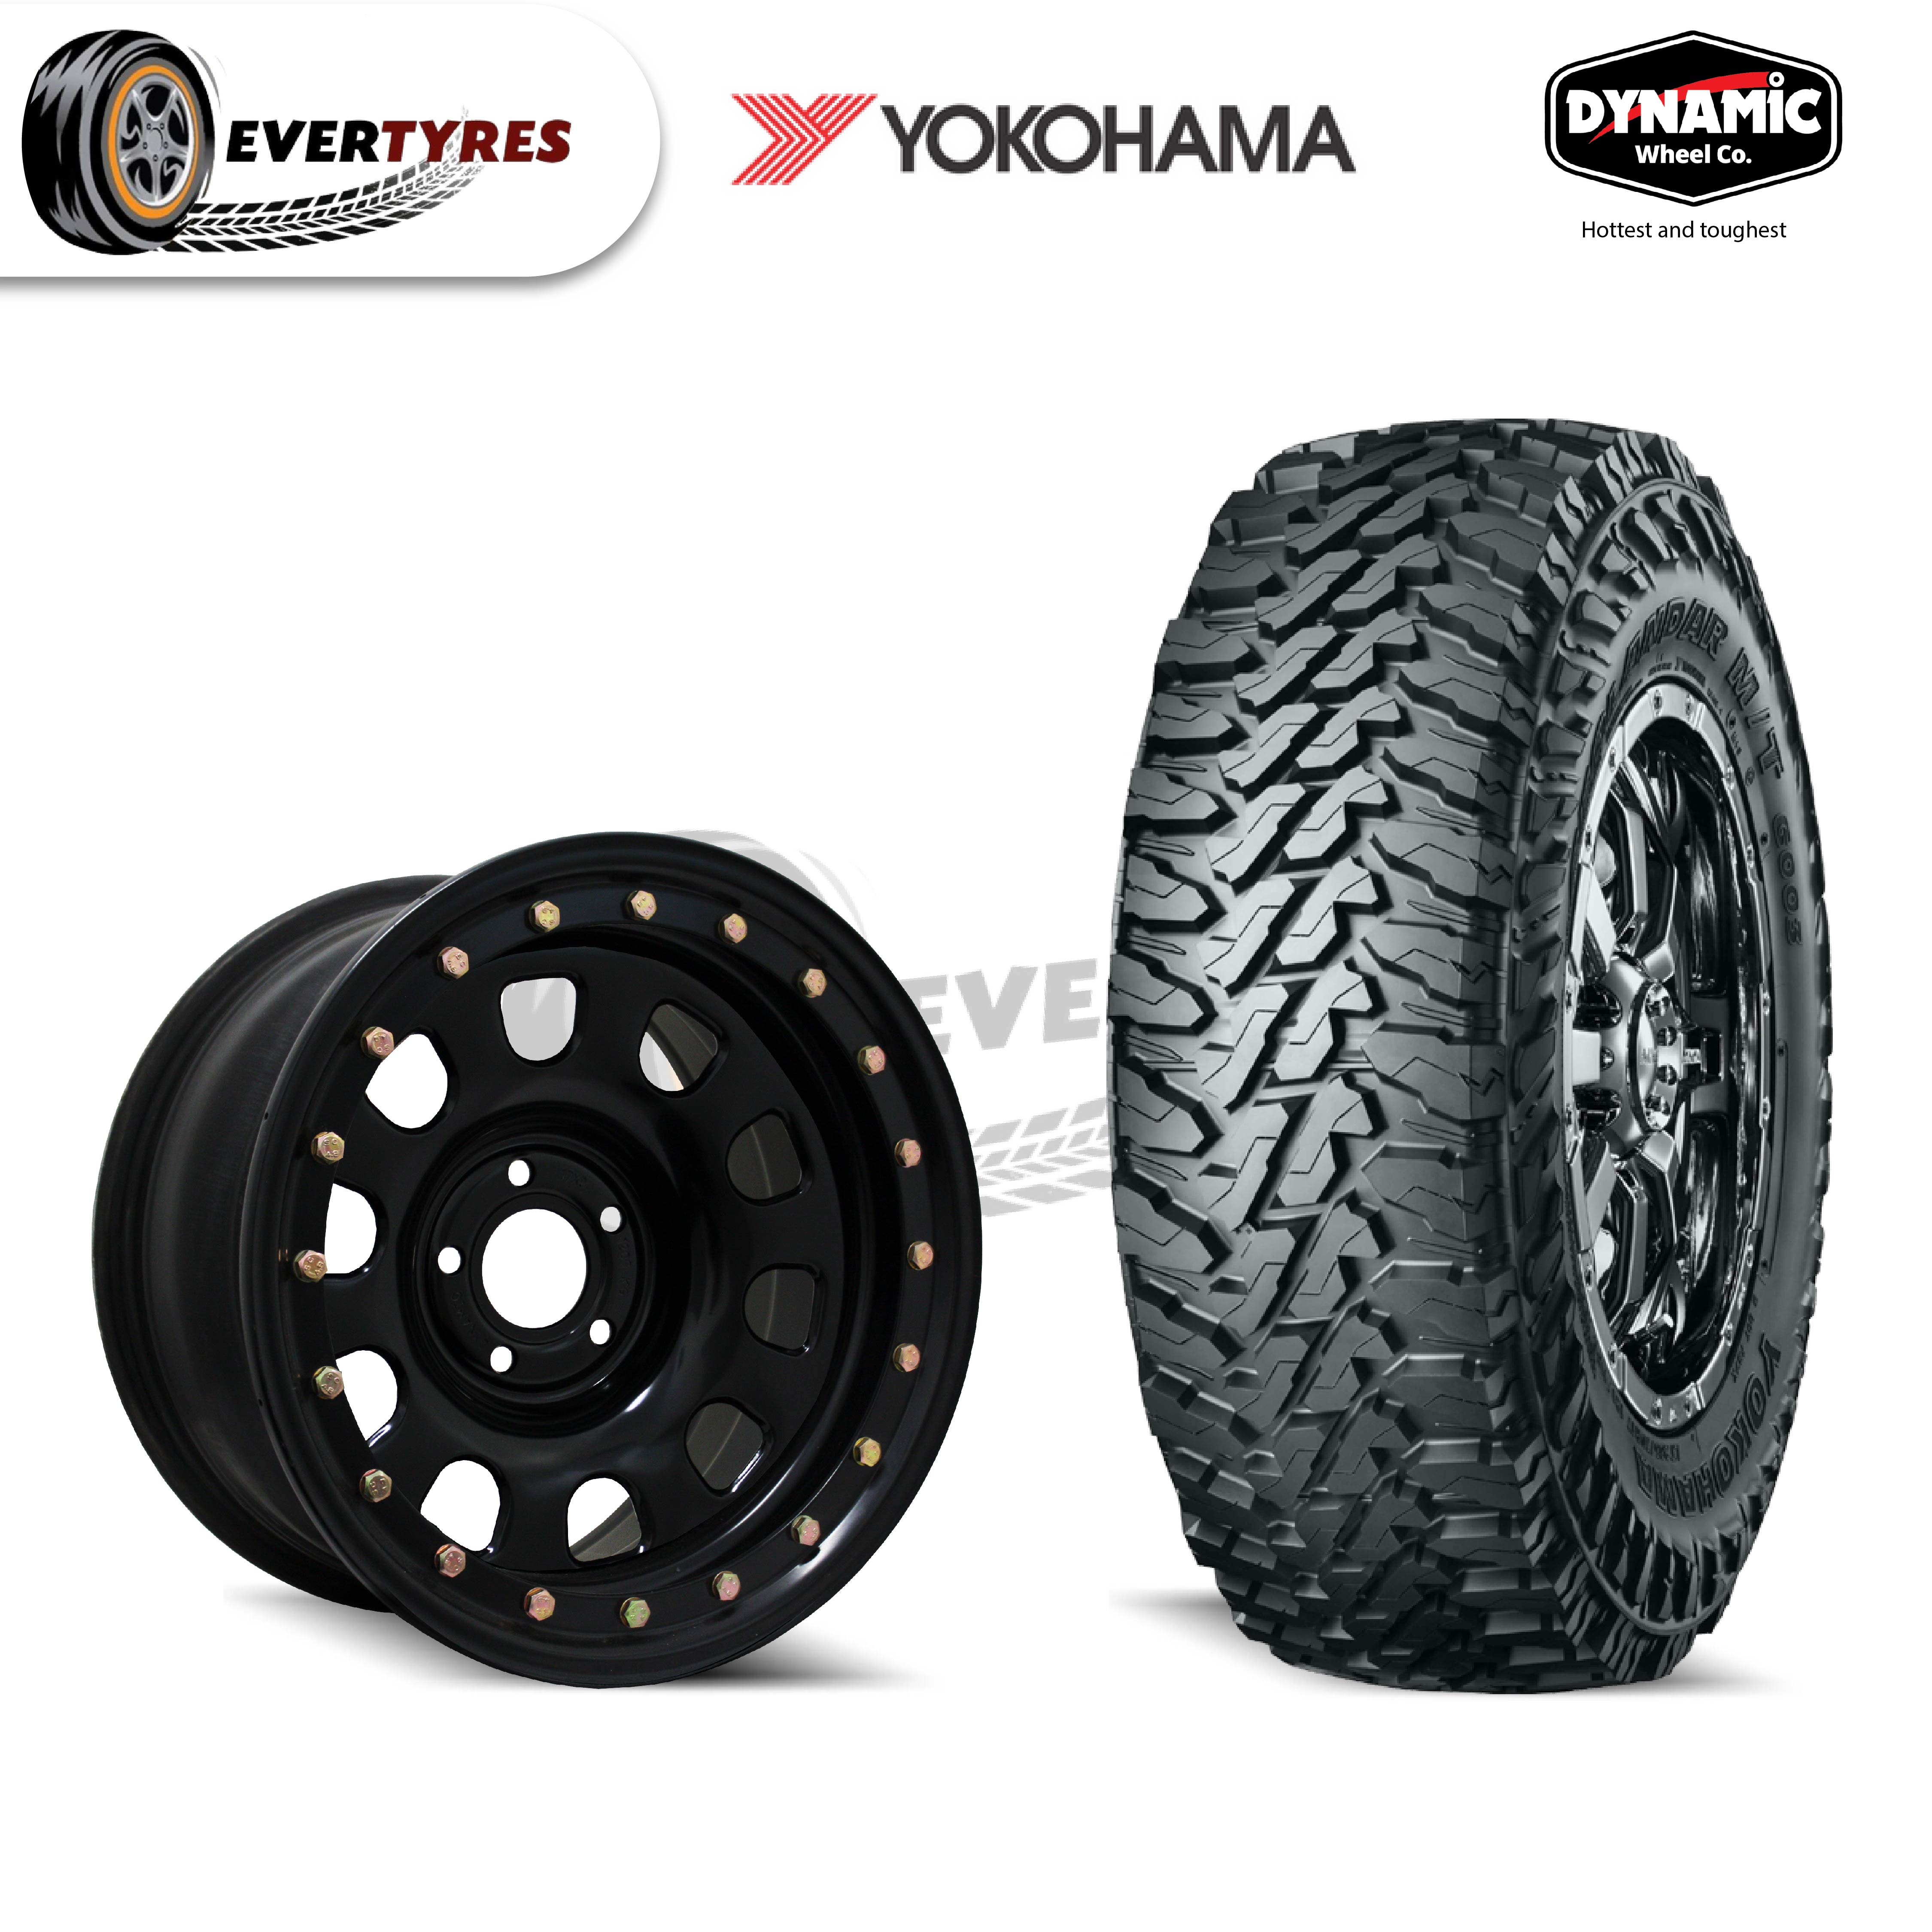 Yokohama Geolandar M/T Tyres & Dynamic Steel Imitation Beadlock Black D